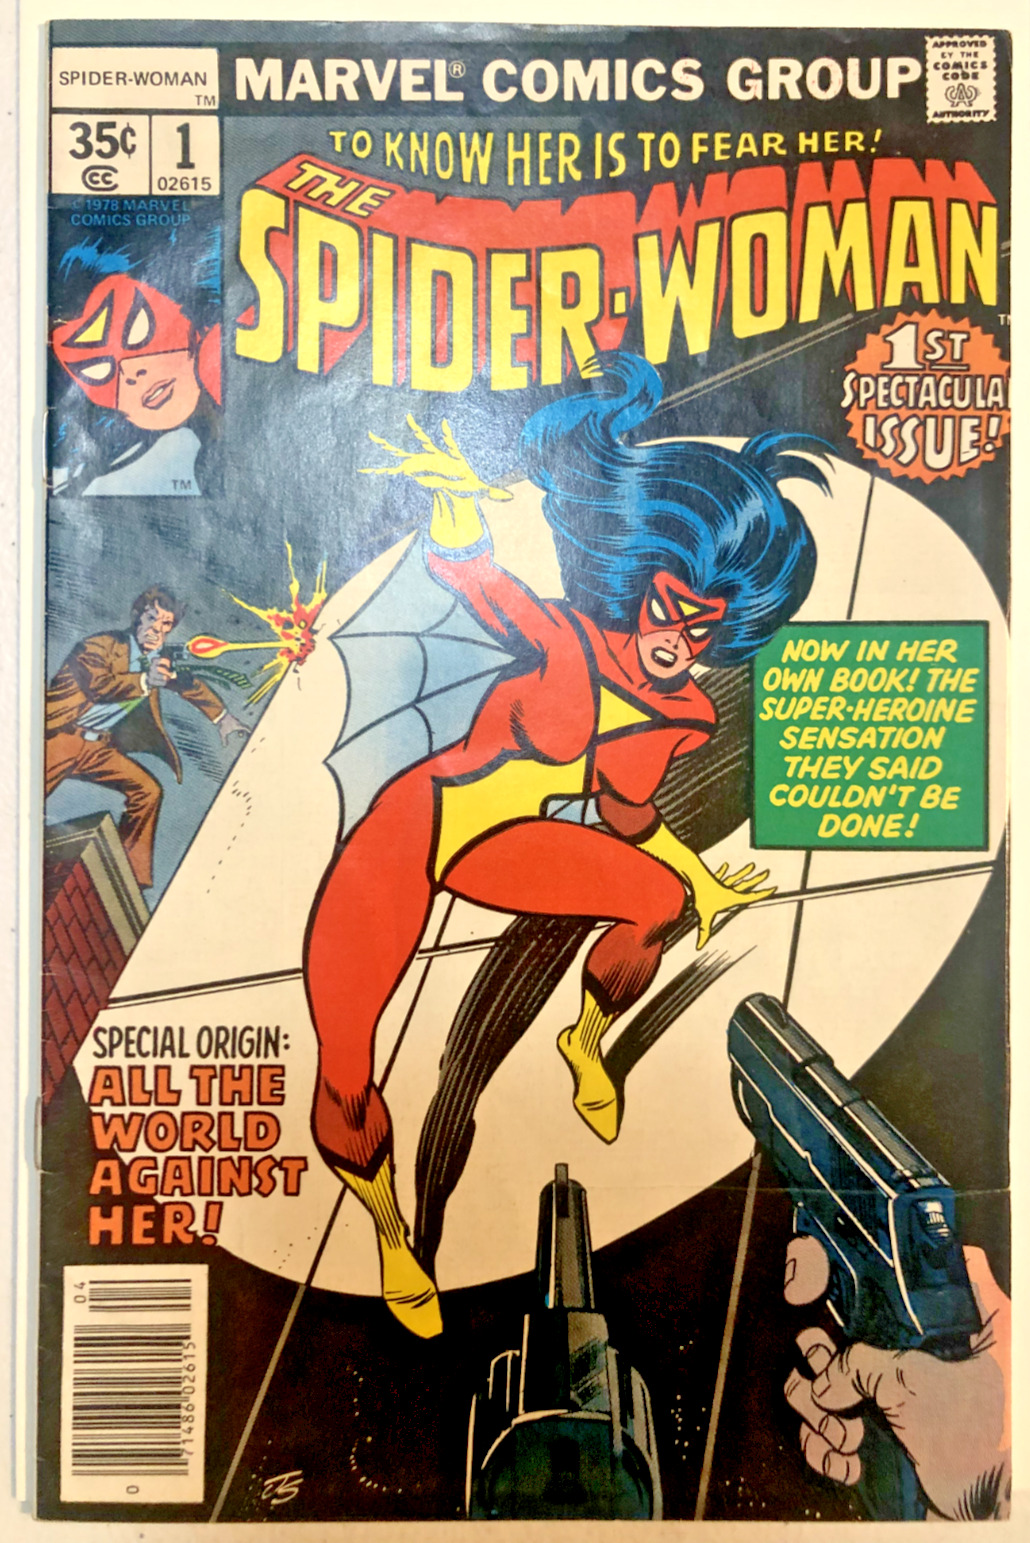 Spider-Woman #1 April 1978 Vintage Bronze Age Marvel Comics Very Nice Condition